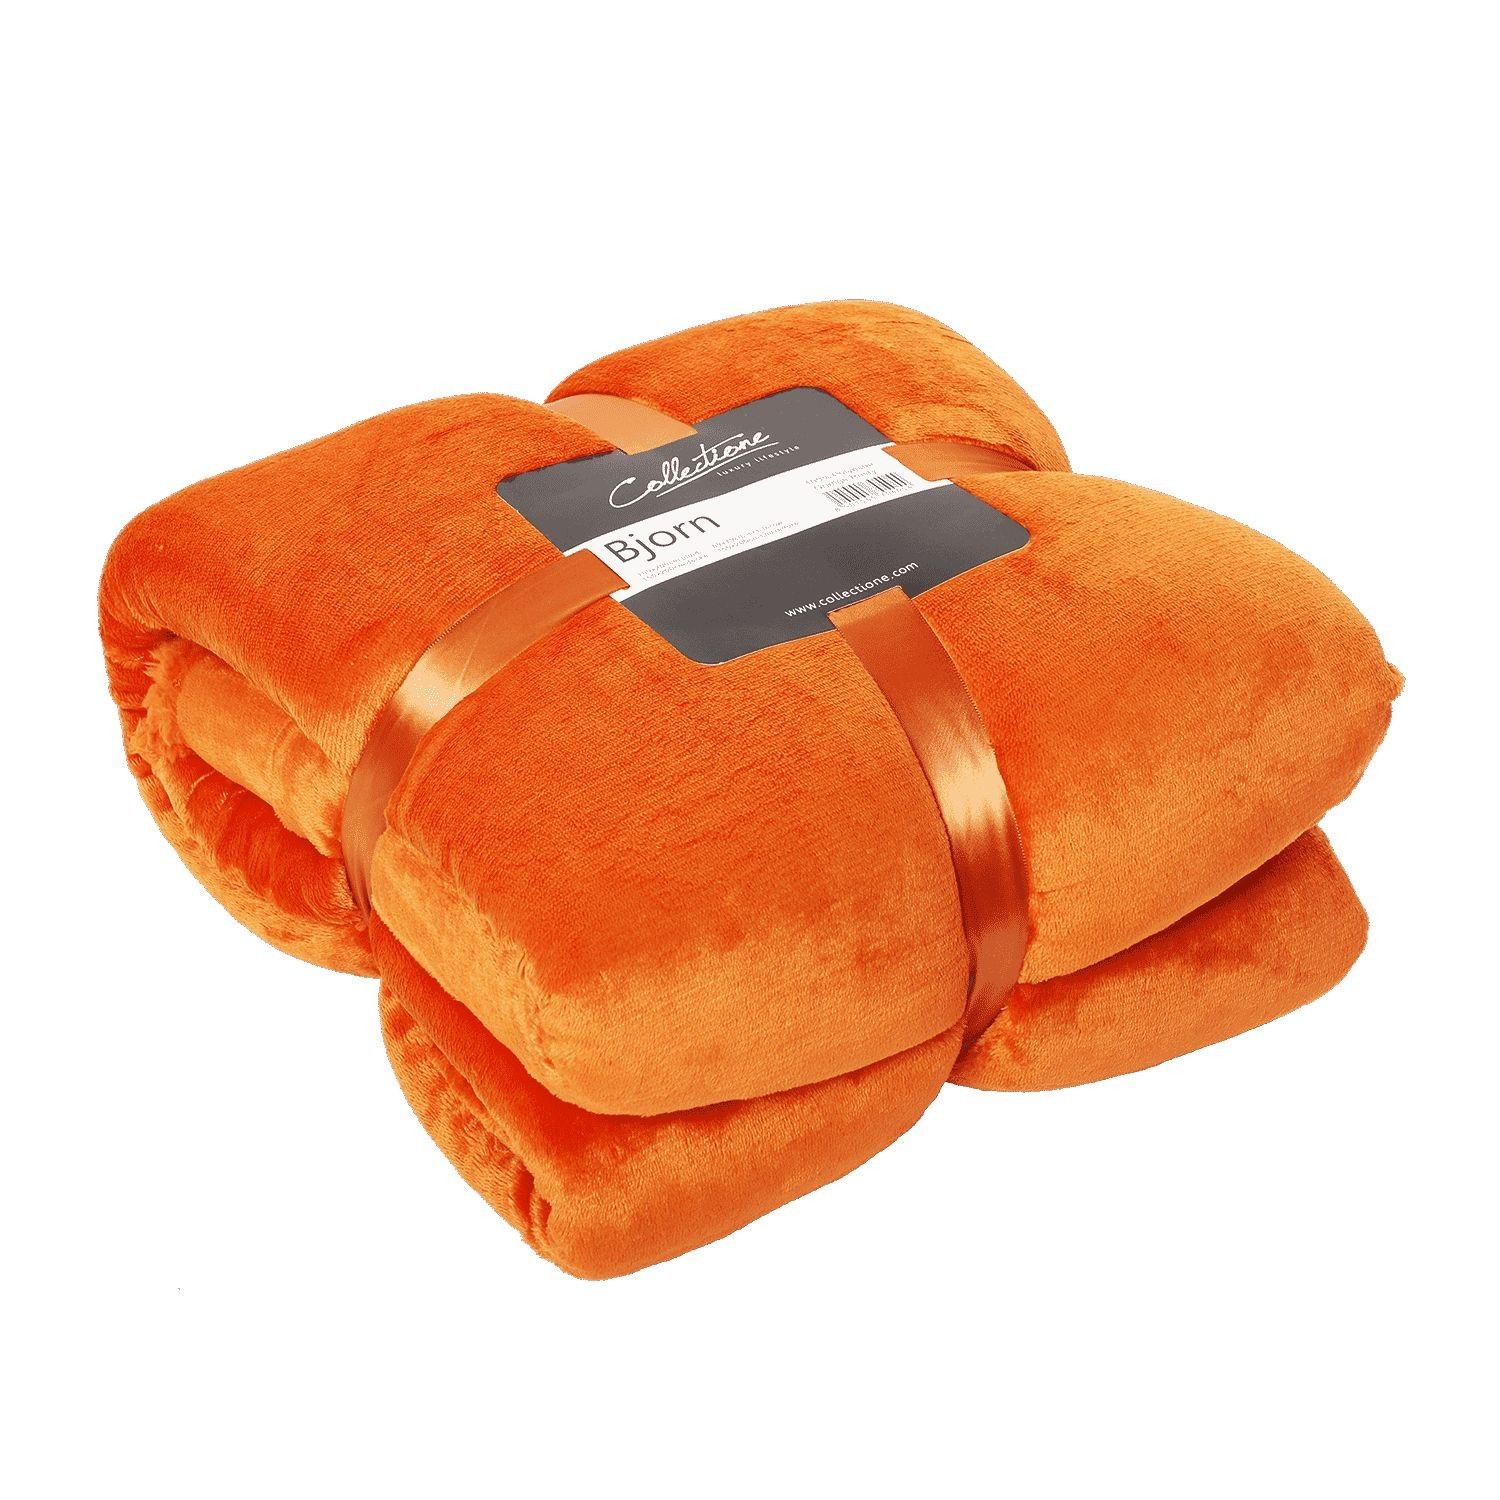 Oranžový chlpatý pléd Bjorn orange rust - 150 * 200 cm